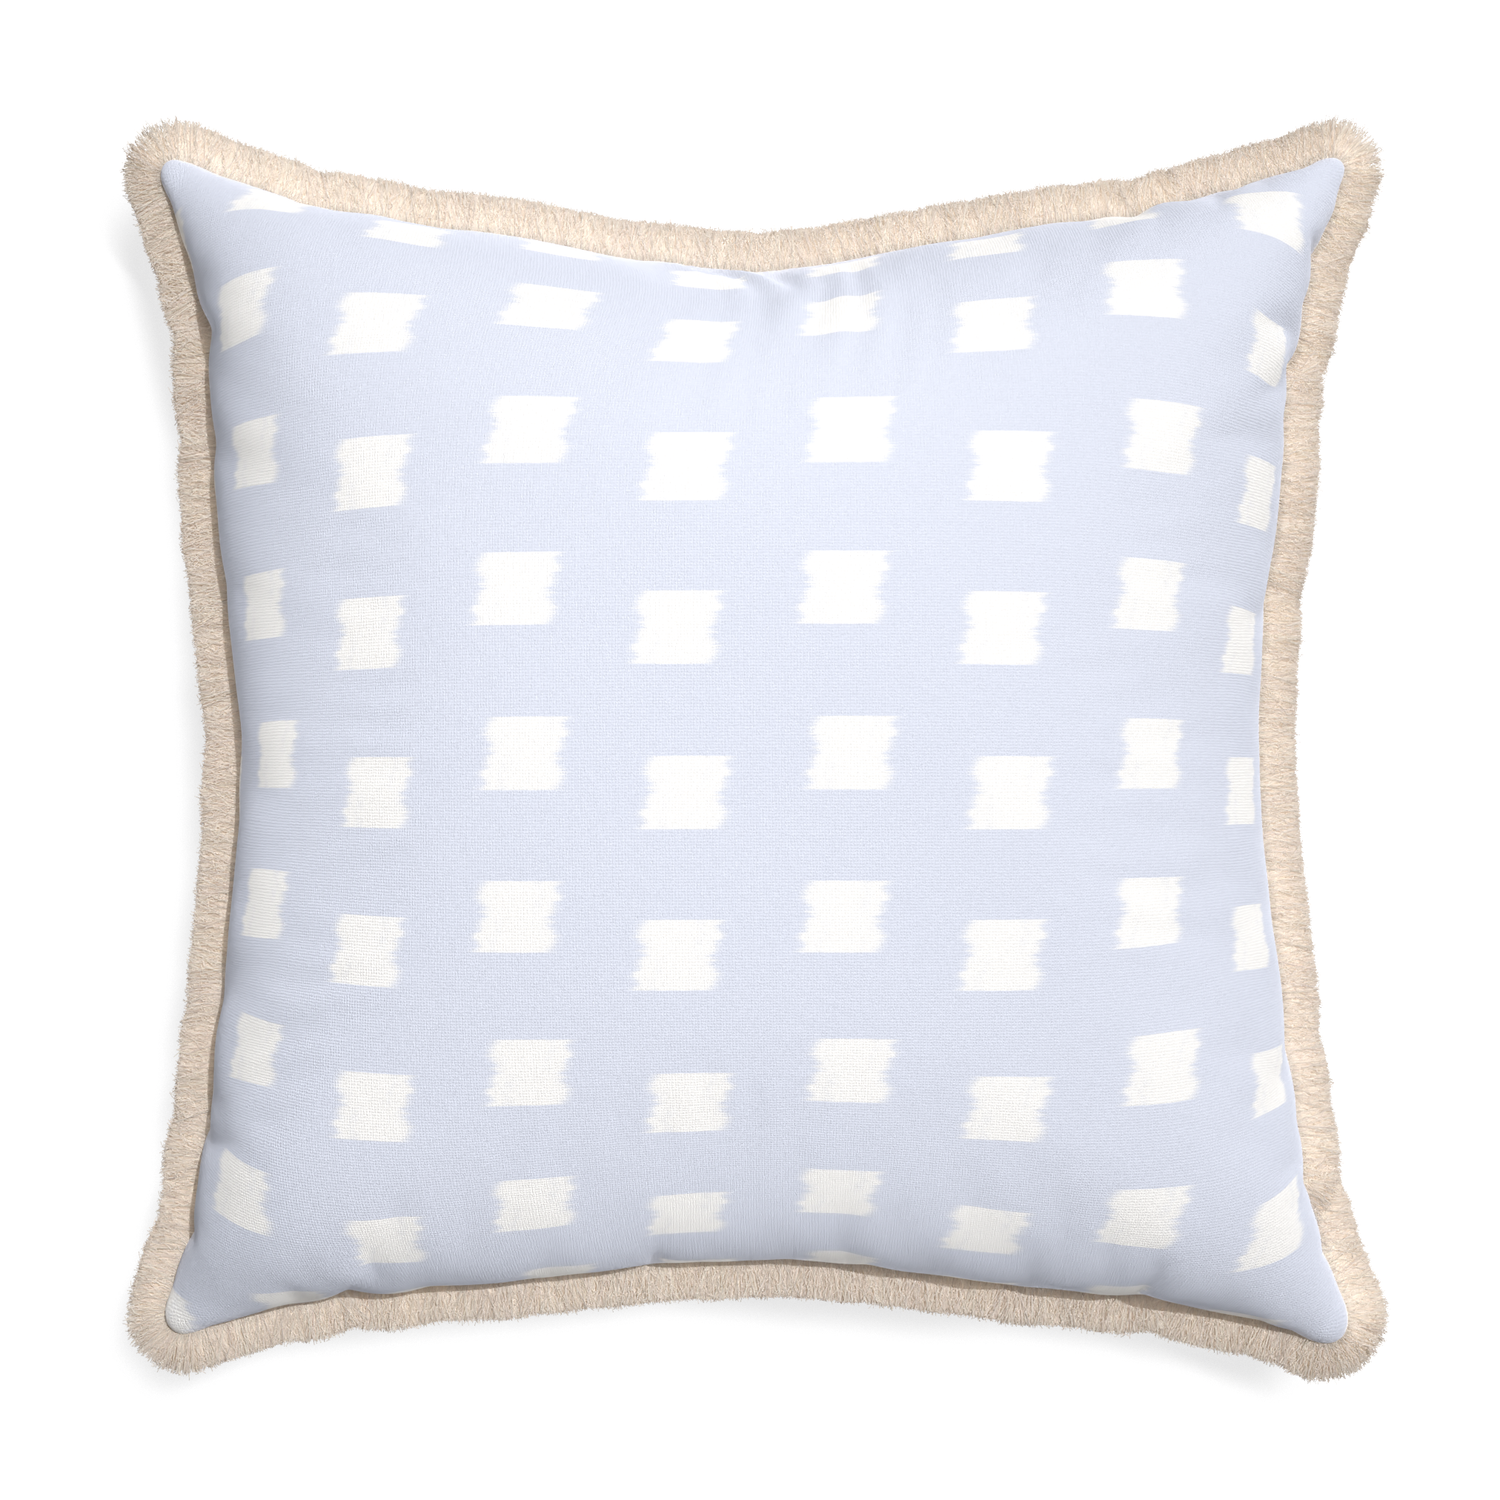 Euro-sham denton custom pillow with cream fringe on white background